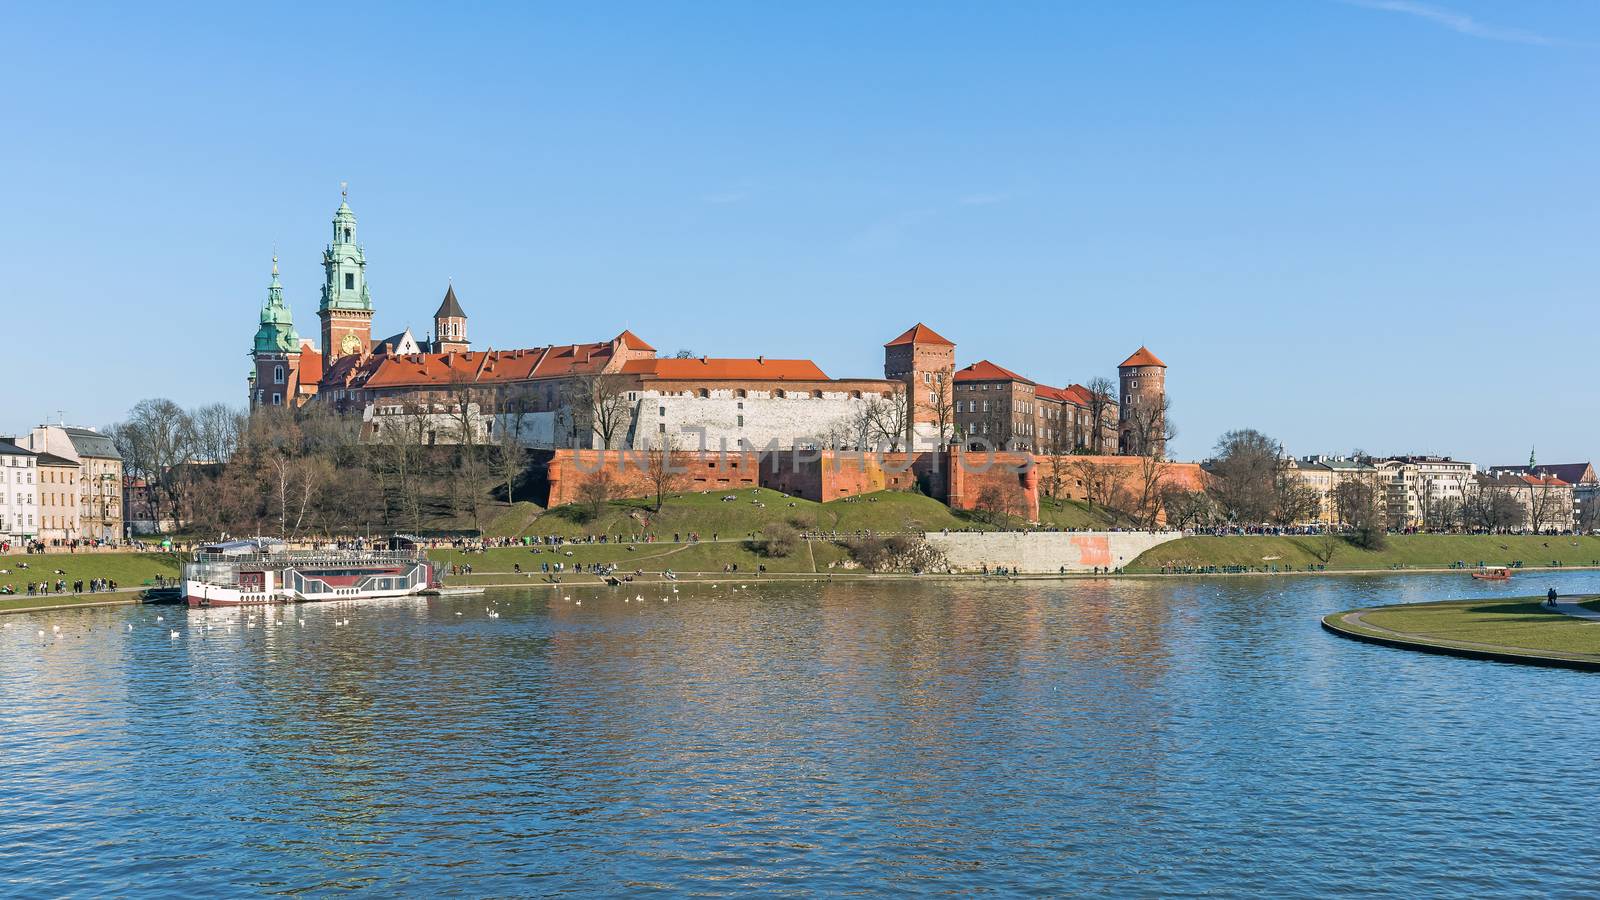 The Royal Castle at the Wawel Hill by pawel_szczepanski